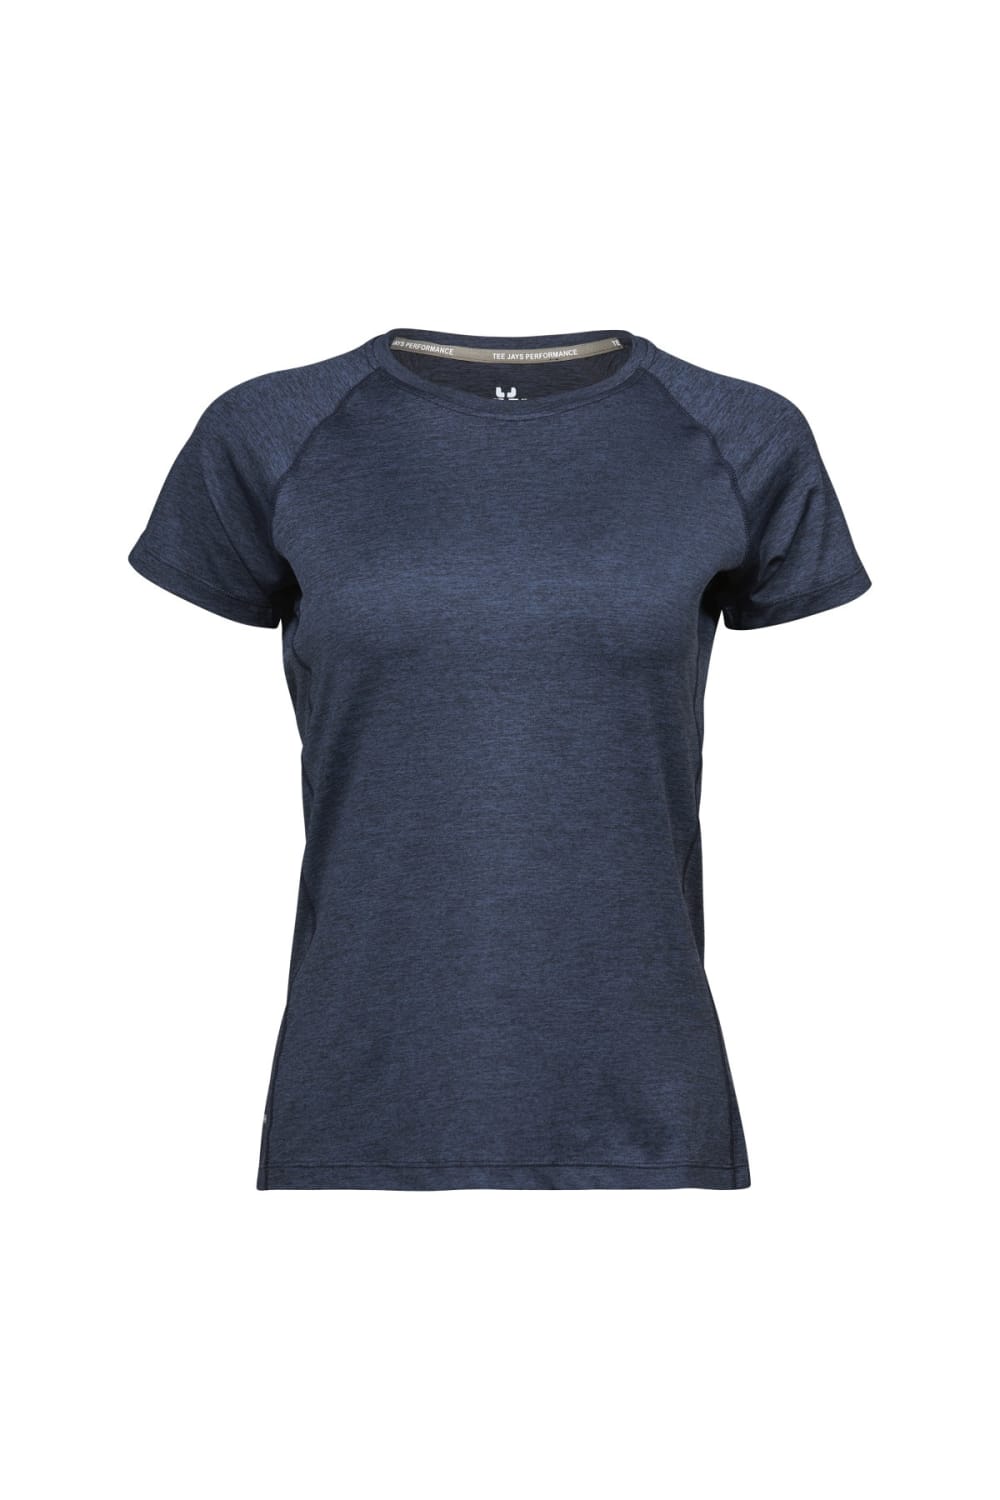 Tee Jays Womens/Ladies Cool Dry Short Sleeve T-Shirt (Navy Melange)